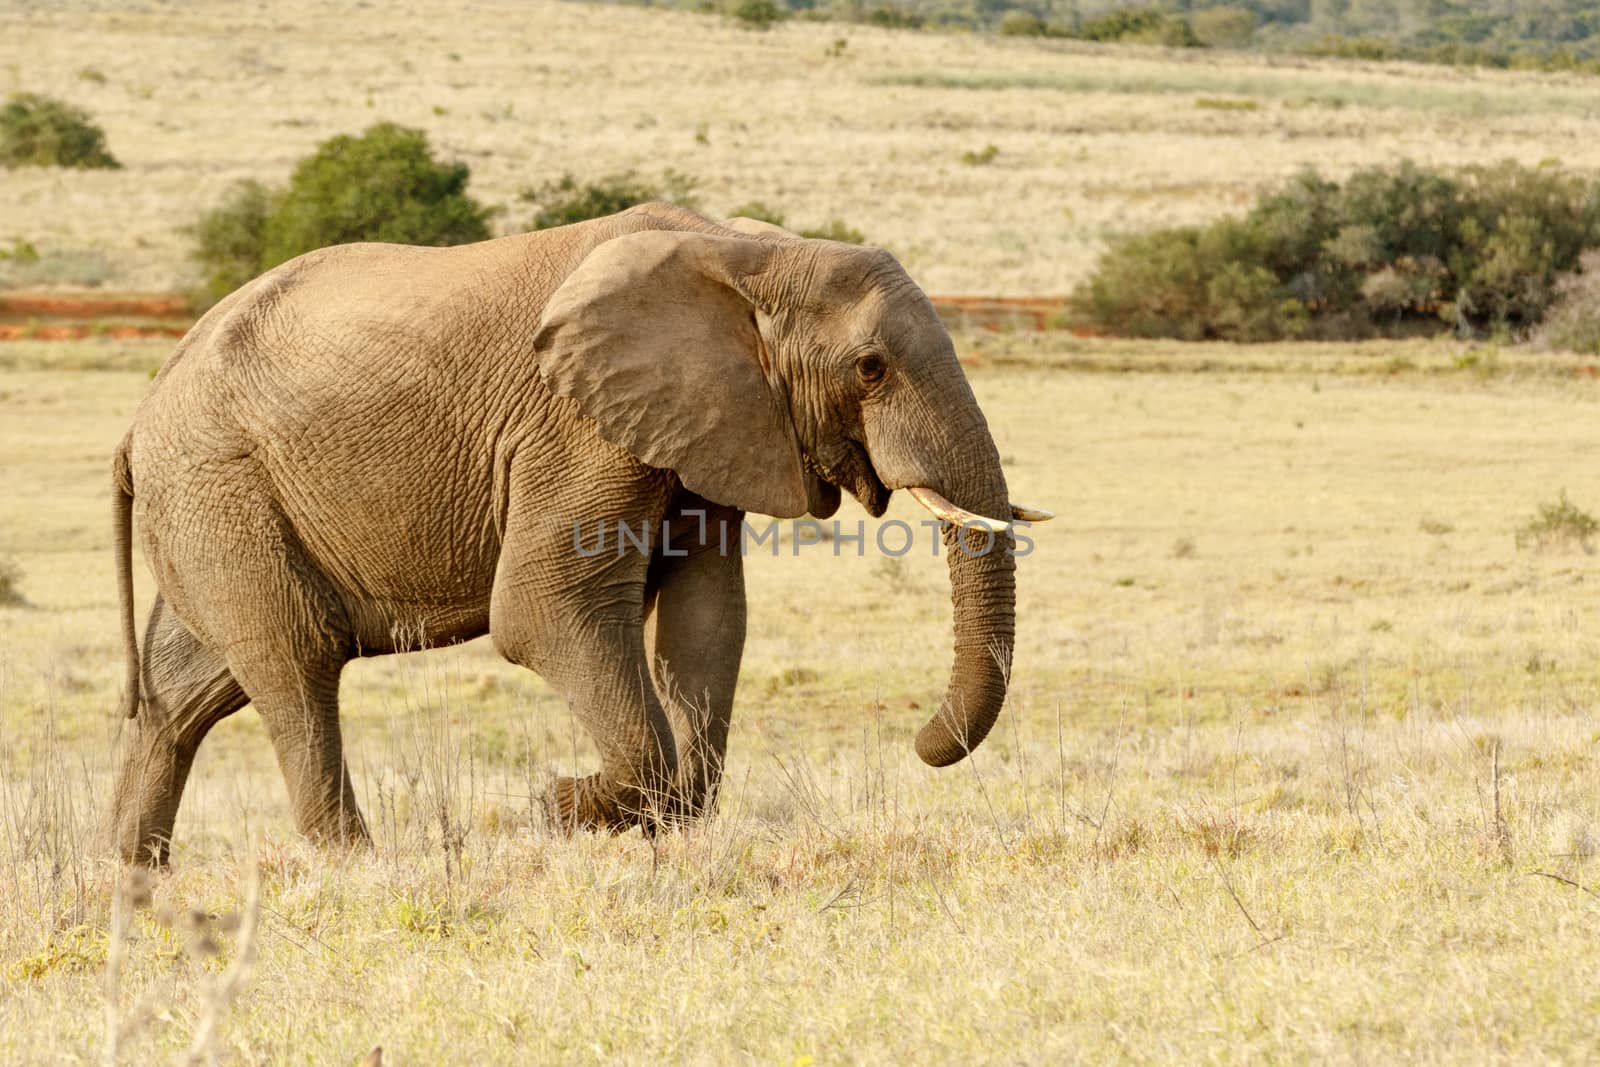 African Elephant taking a stroll in the open yellow field.